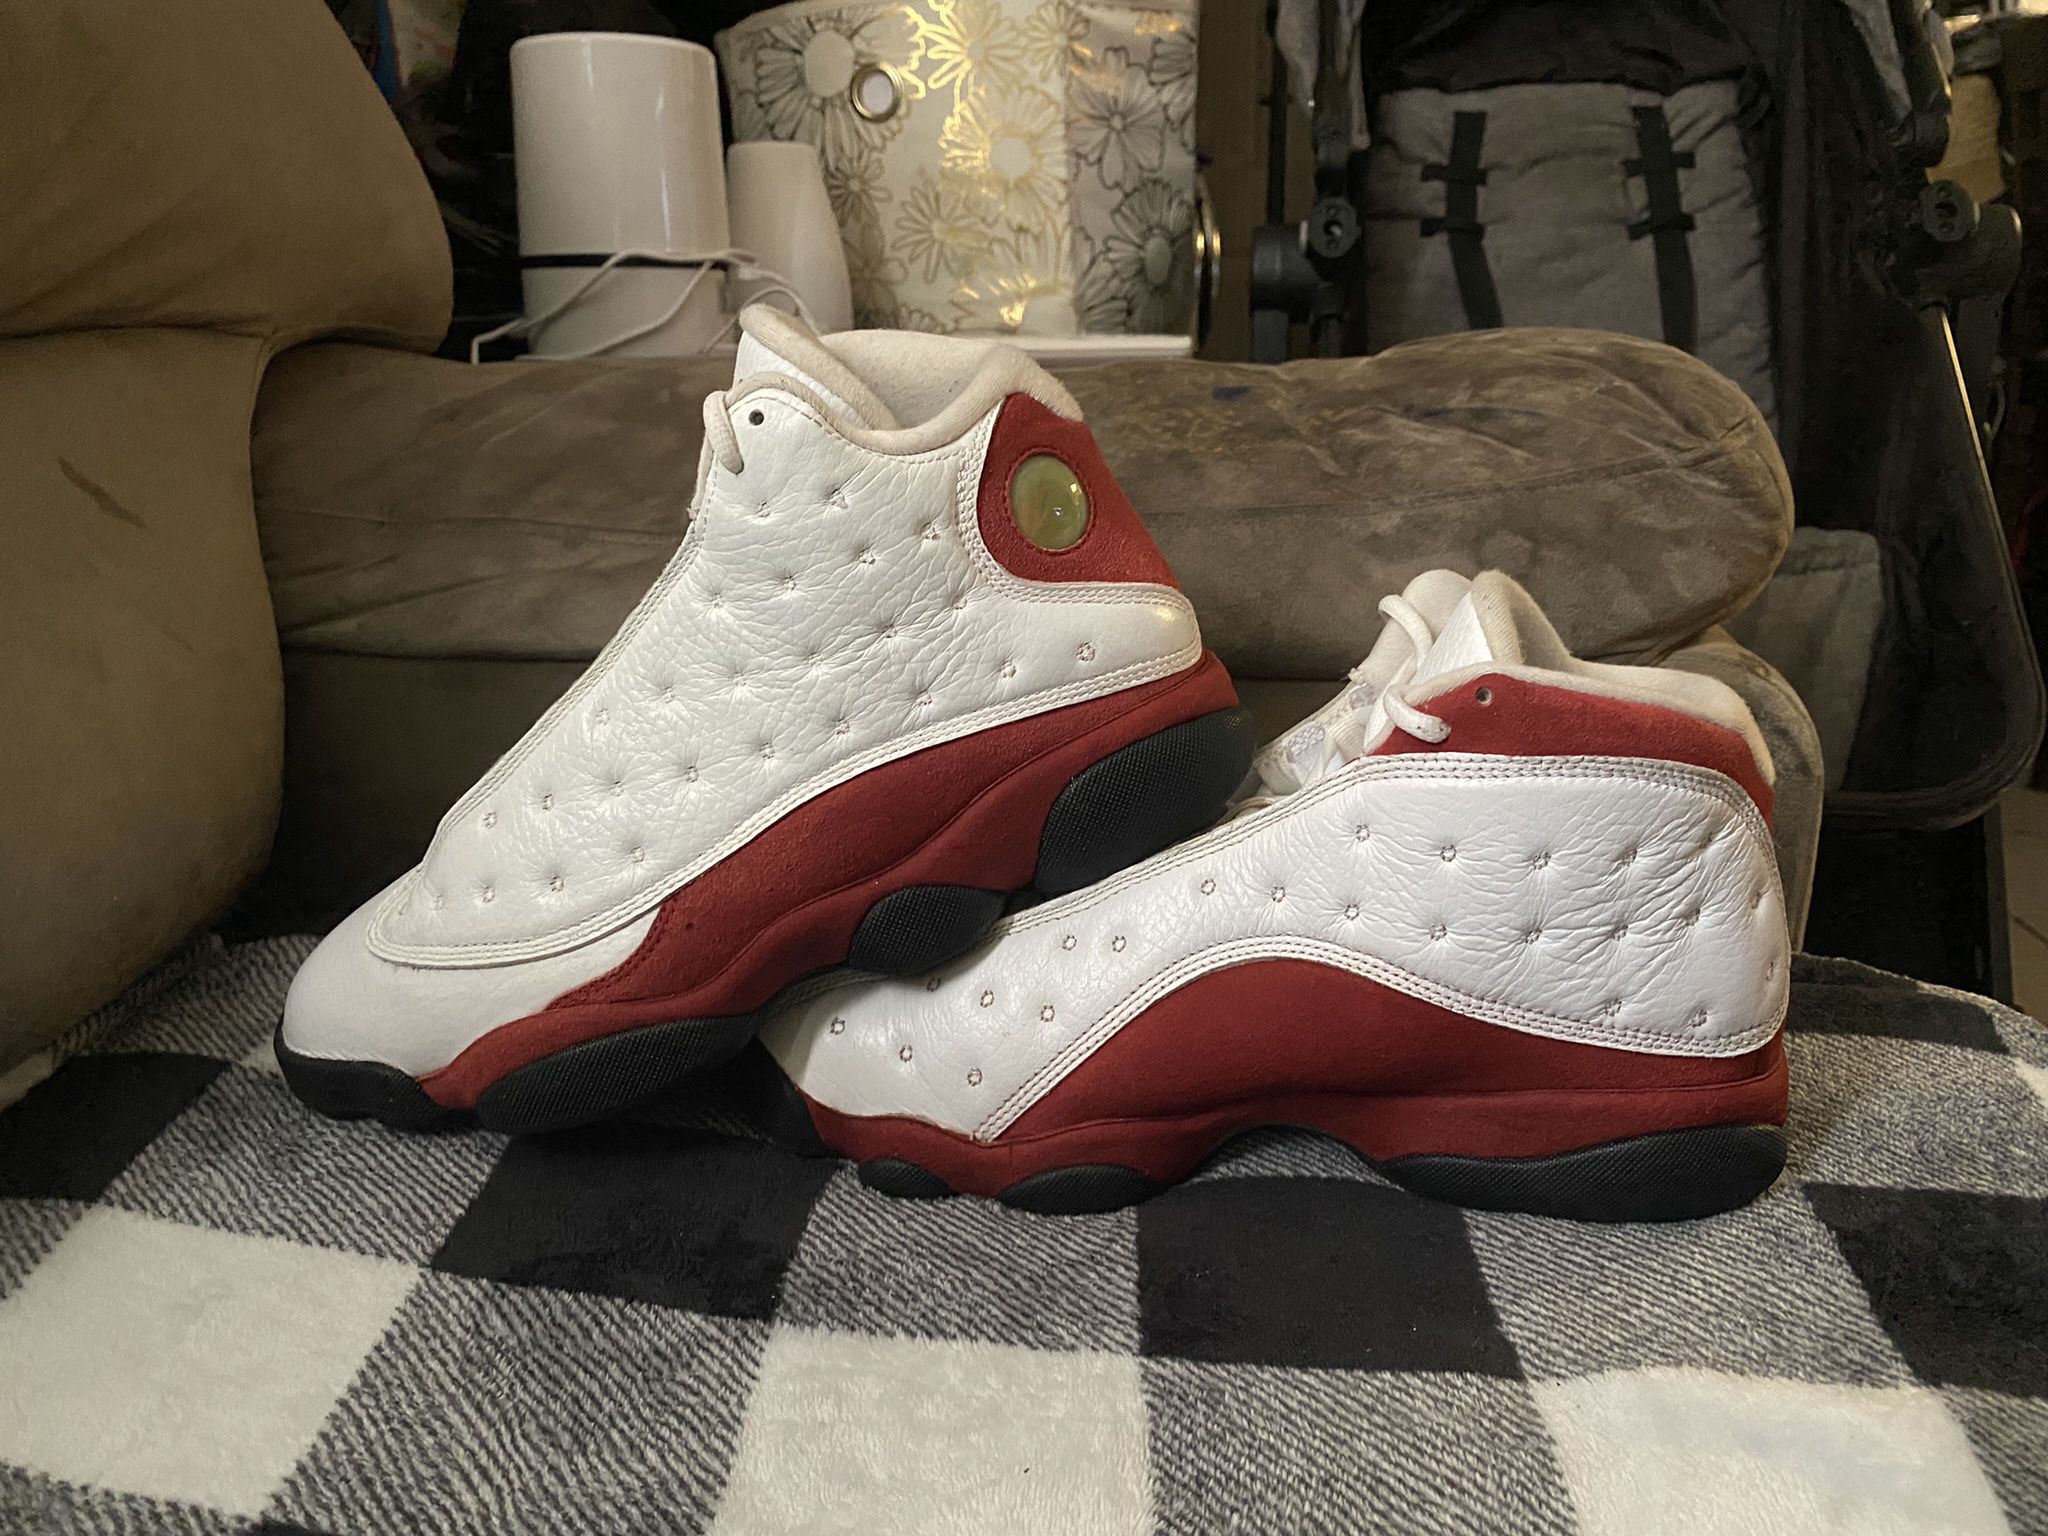 Jordan Retro 13 Cherry Red 2017 Size 8.5